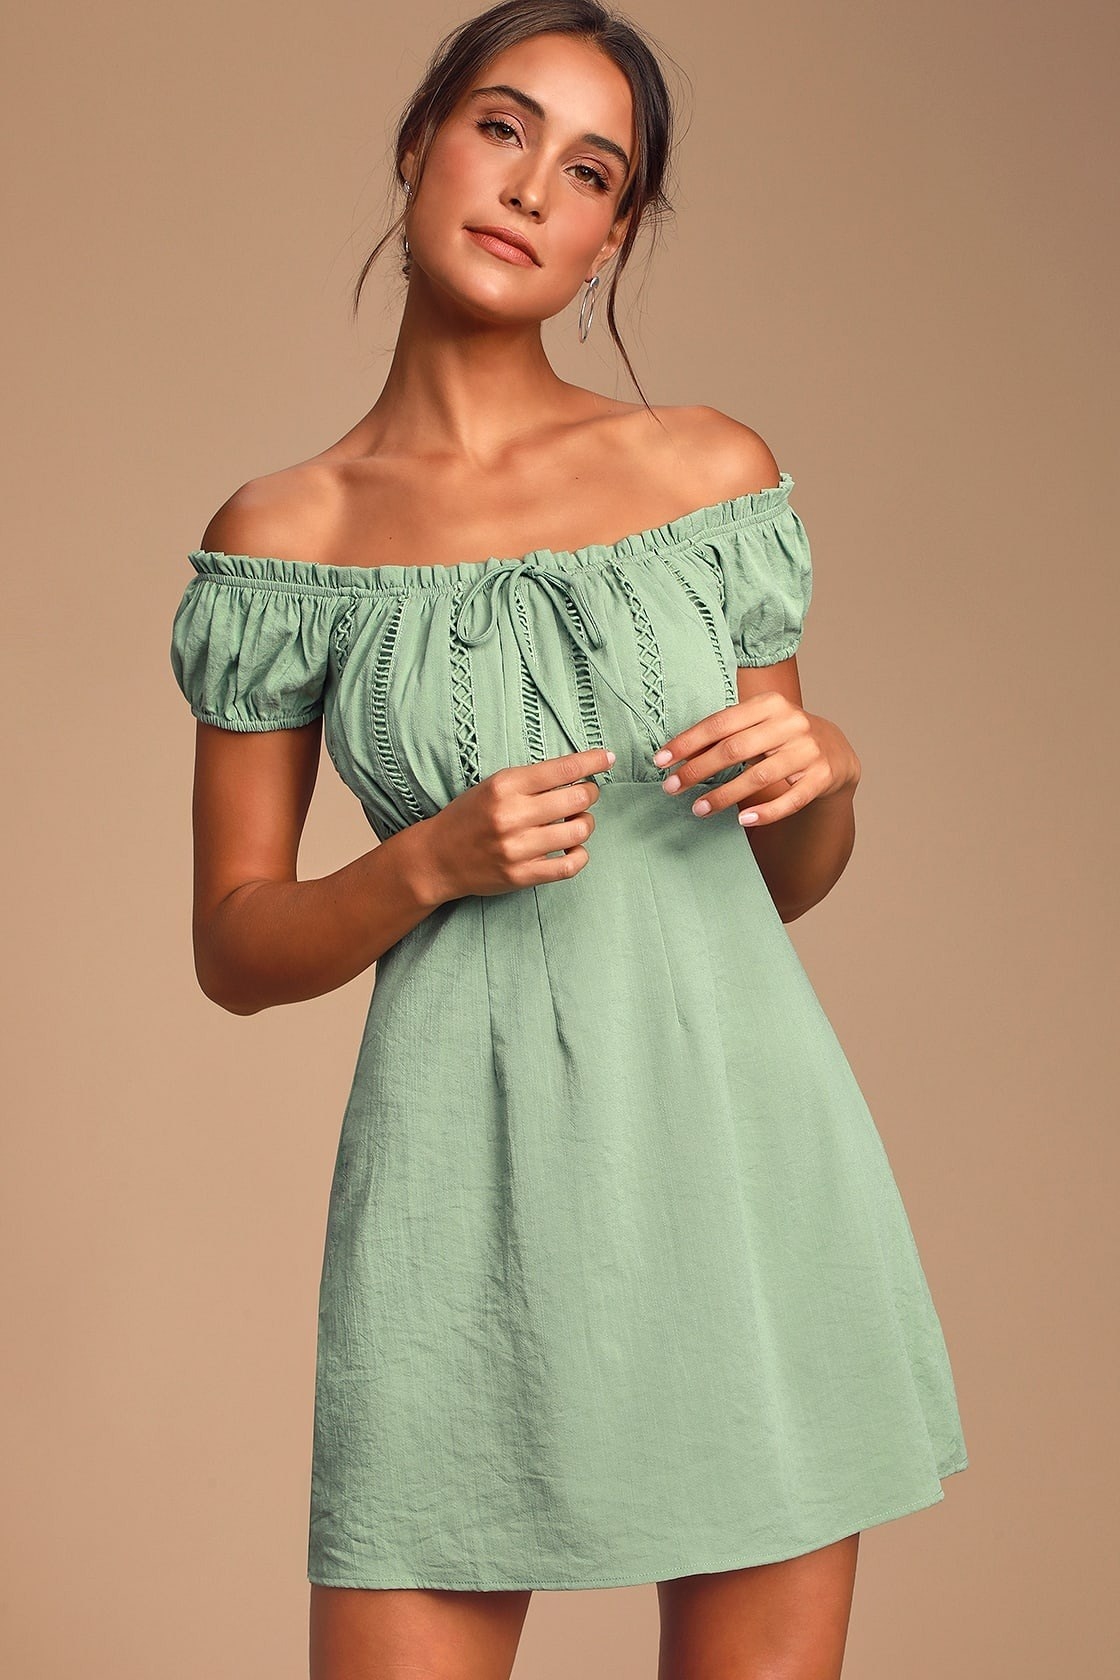 Model wearing off the shoulder green mini dress